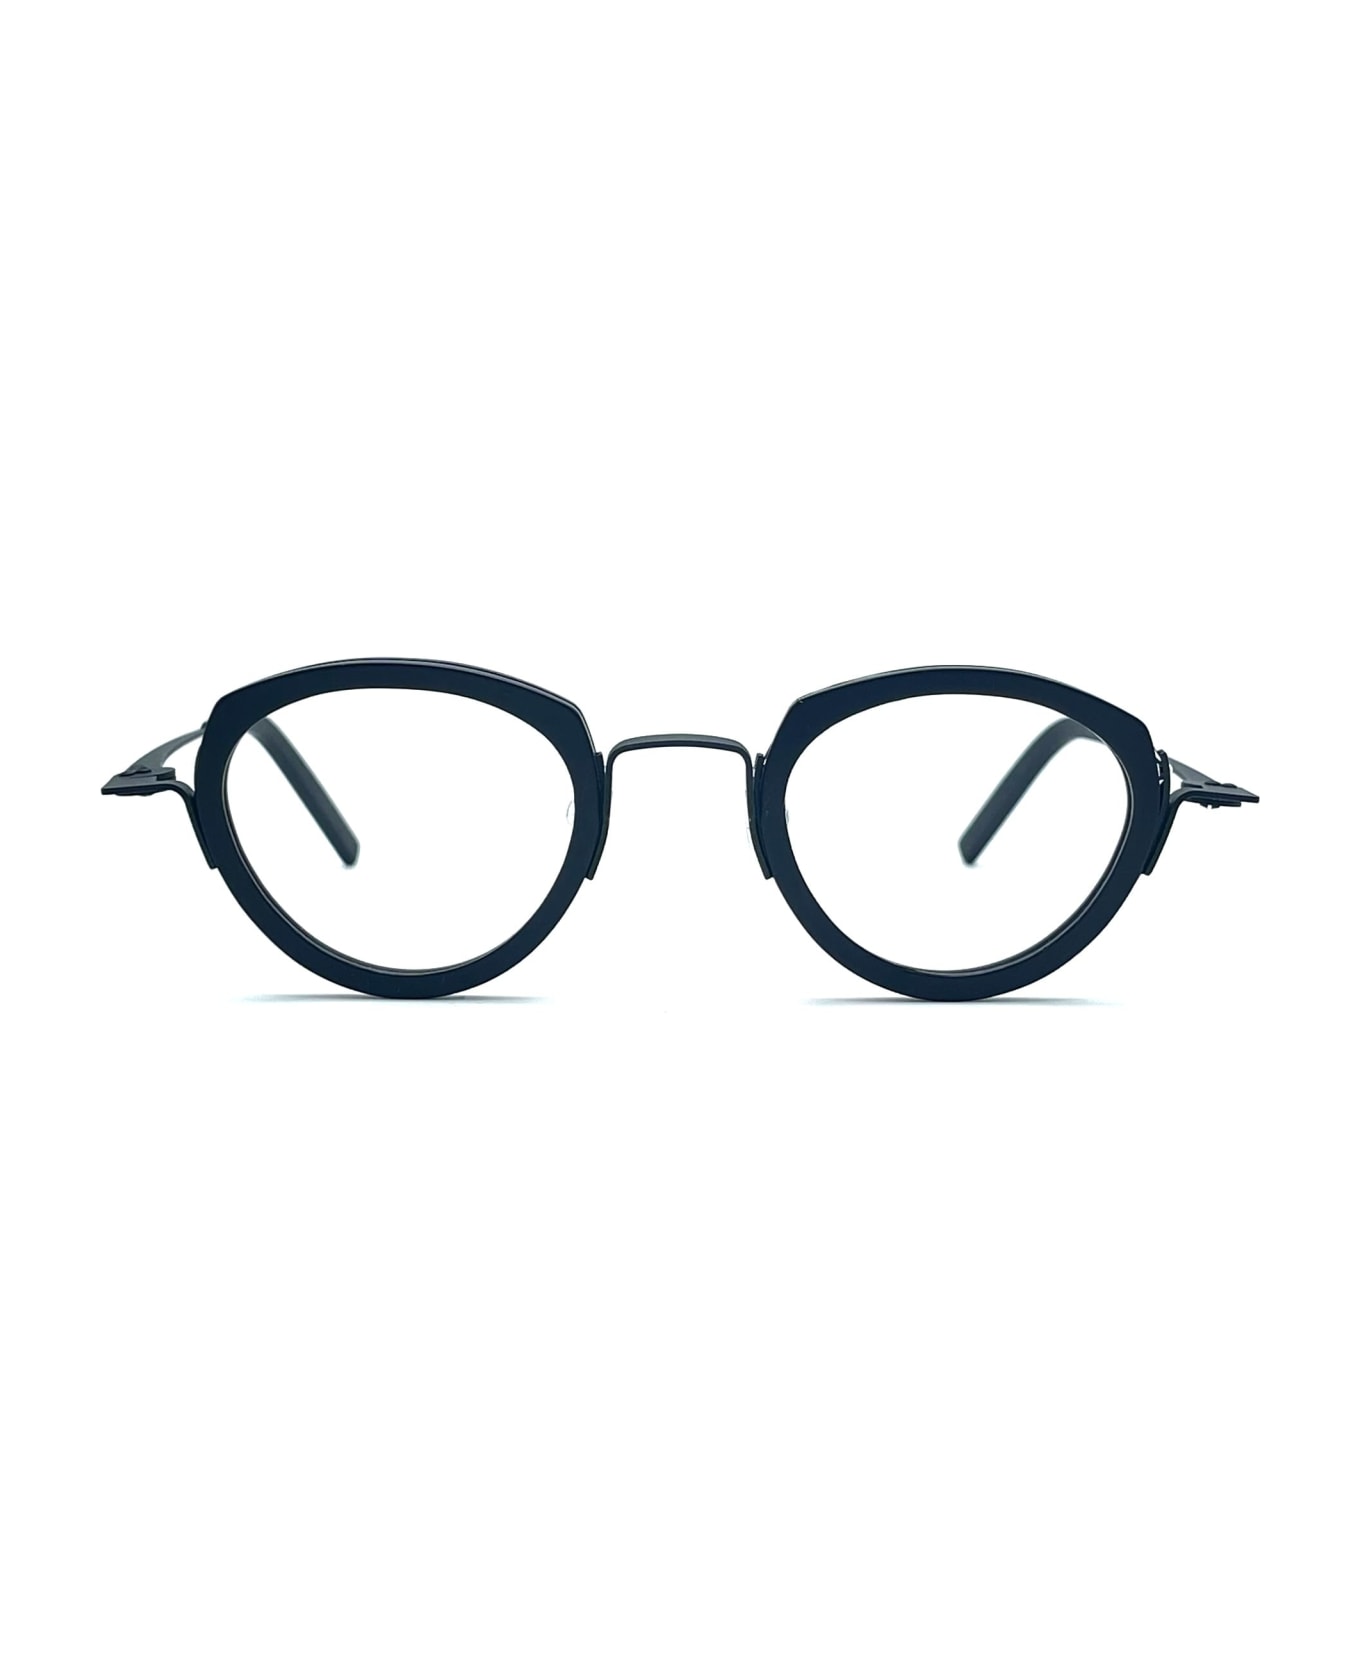 Theo Eyewear Spinach - 2 Glasses - black matte アイウェア